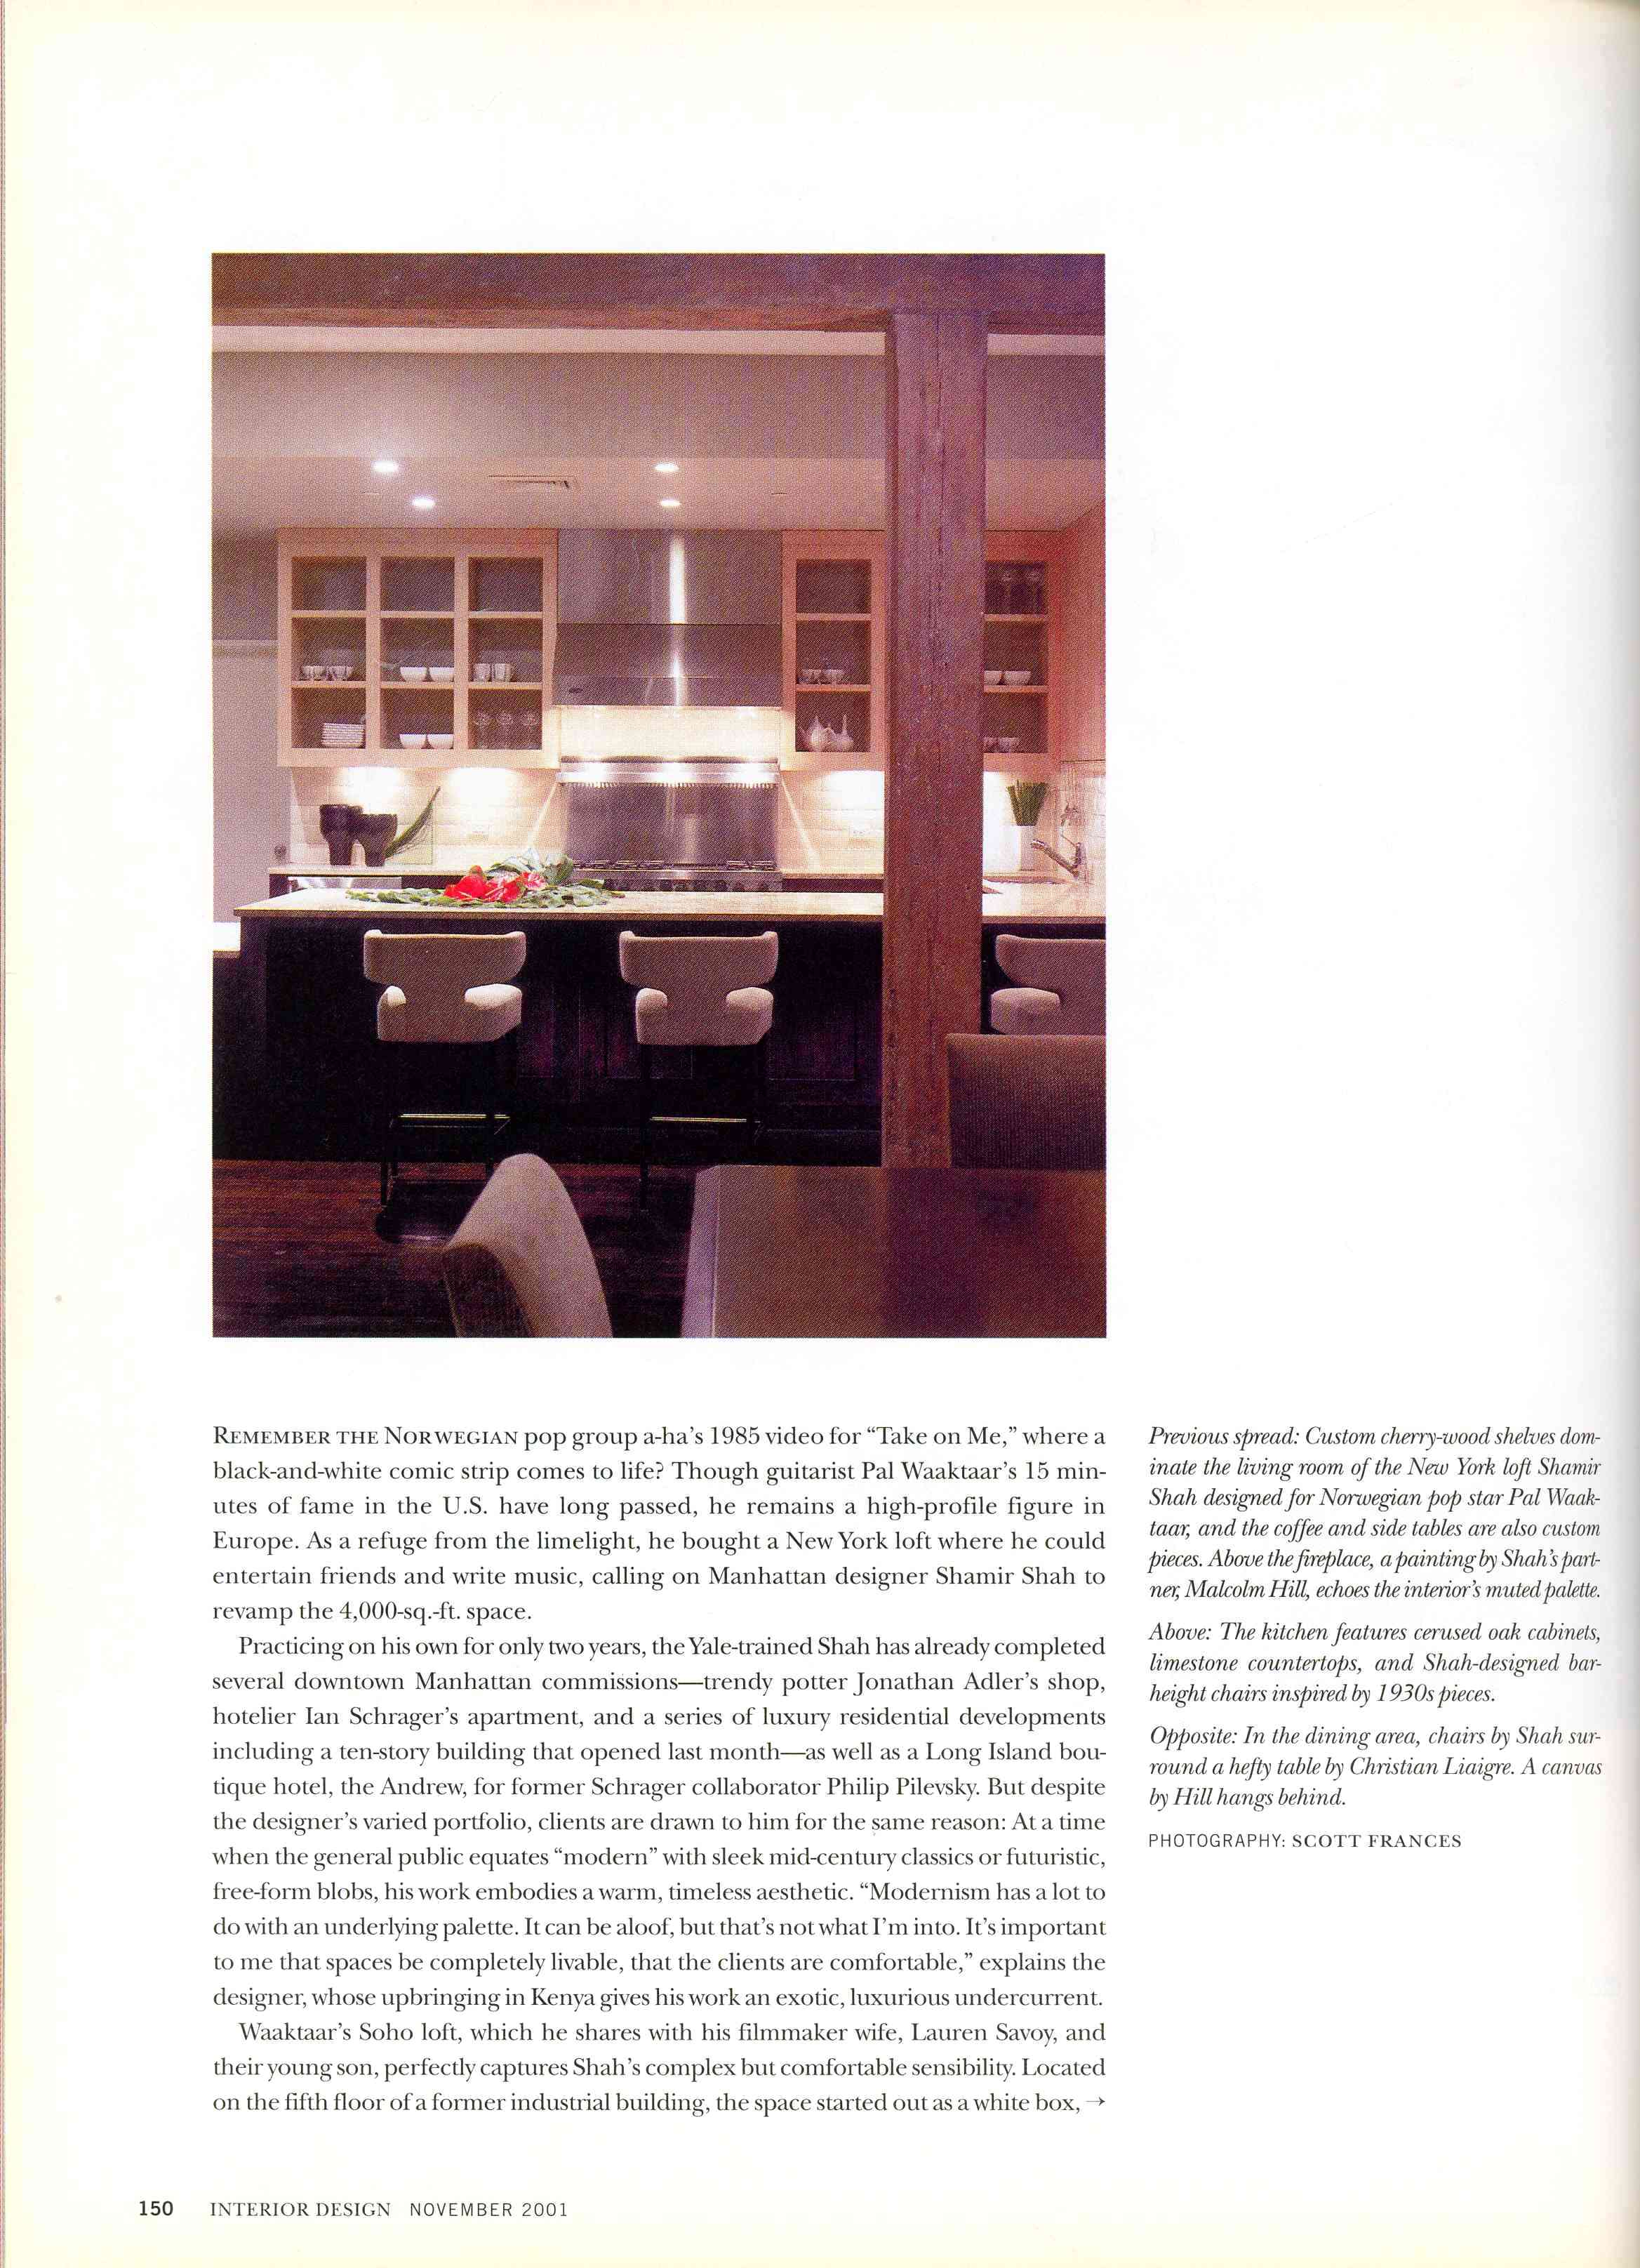 Interior Design_Nov 01_Savoy_Full Article_Page_4.jpg